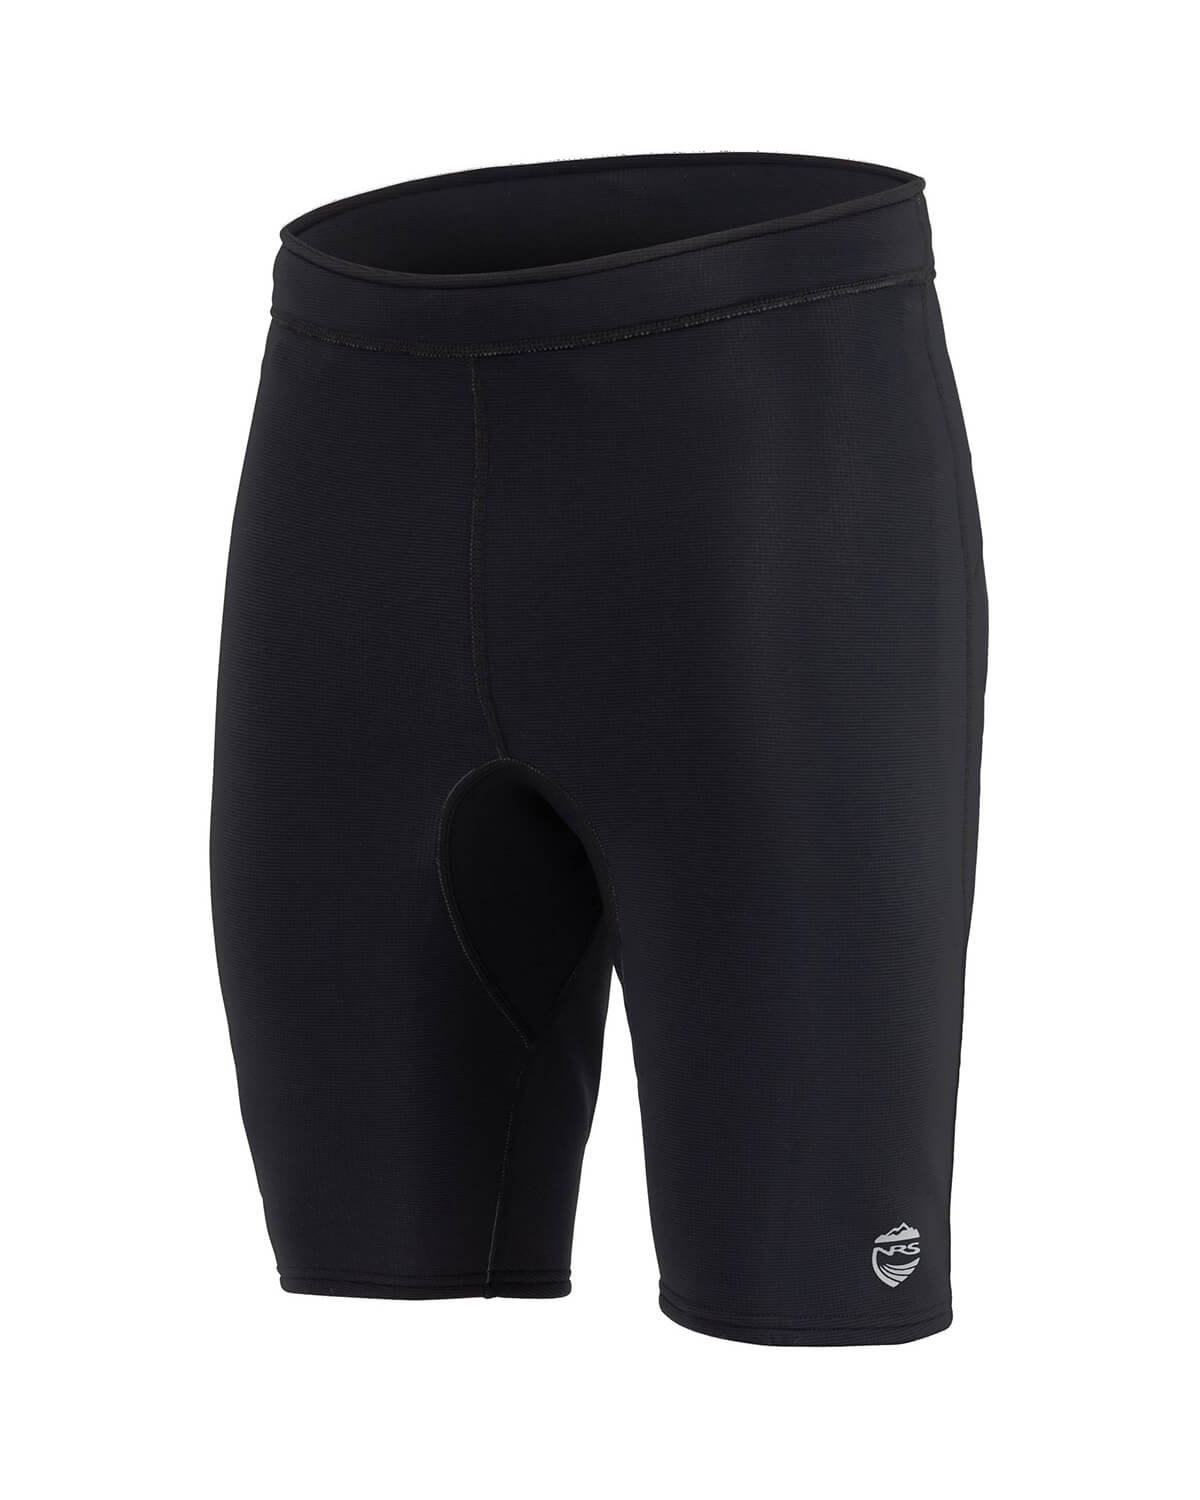 0.5mm Men's NRS HYDROSKIN Wetsuit Shorts